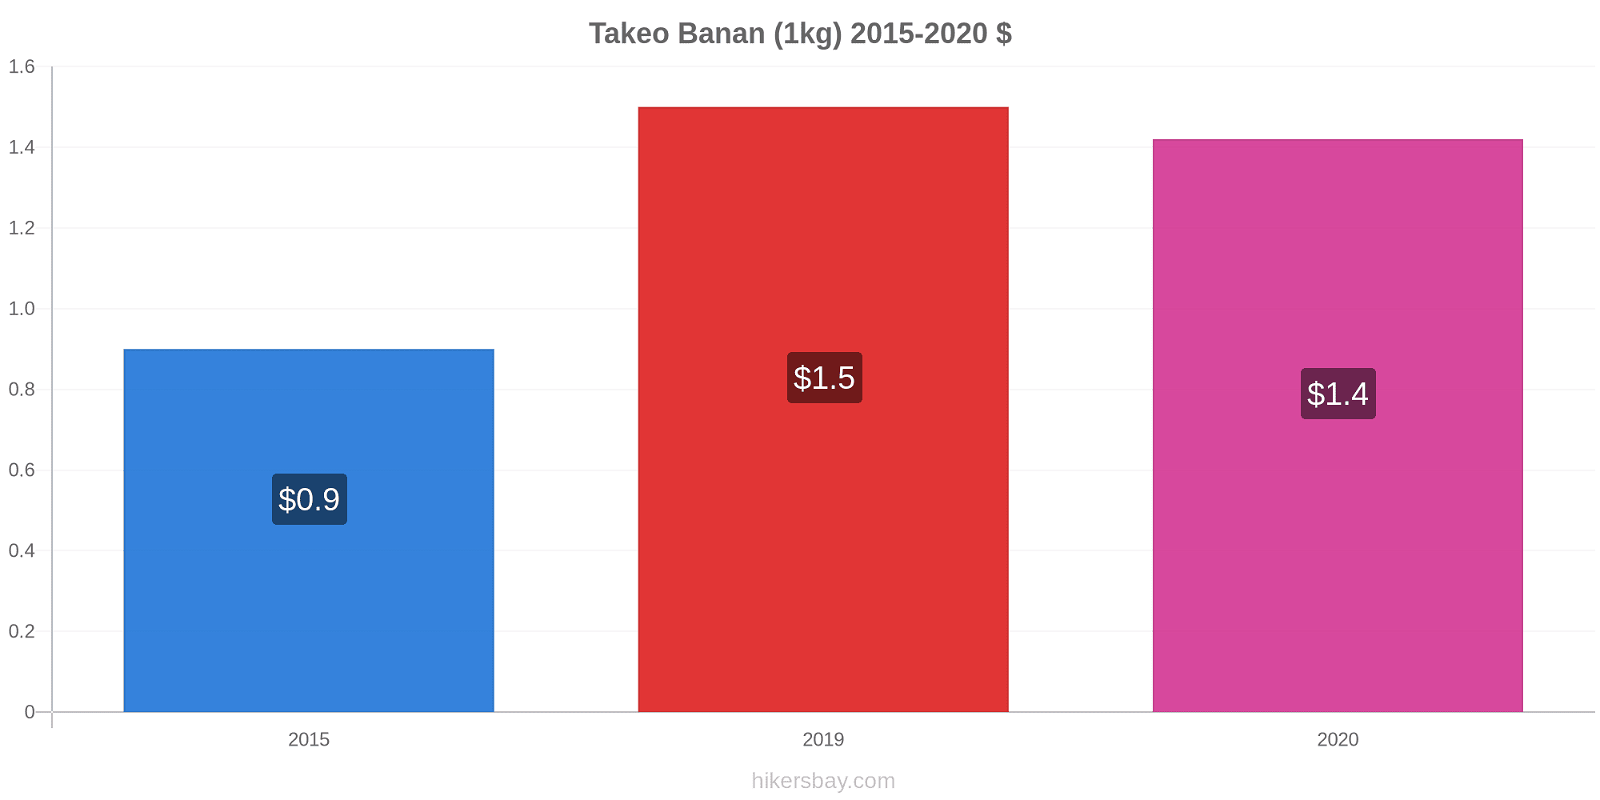 Takeo prisendringer Banan (1kg) hikersbay.com